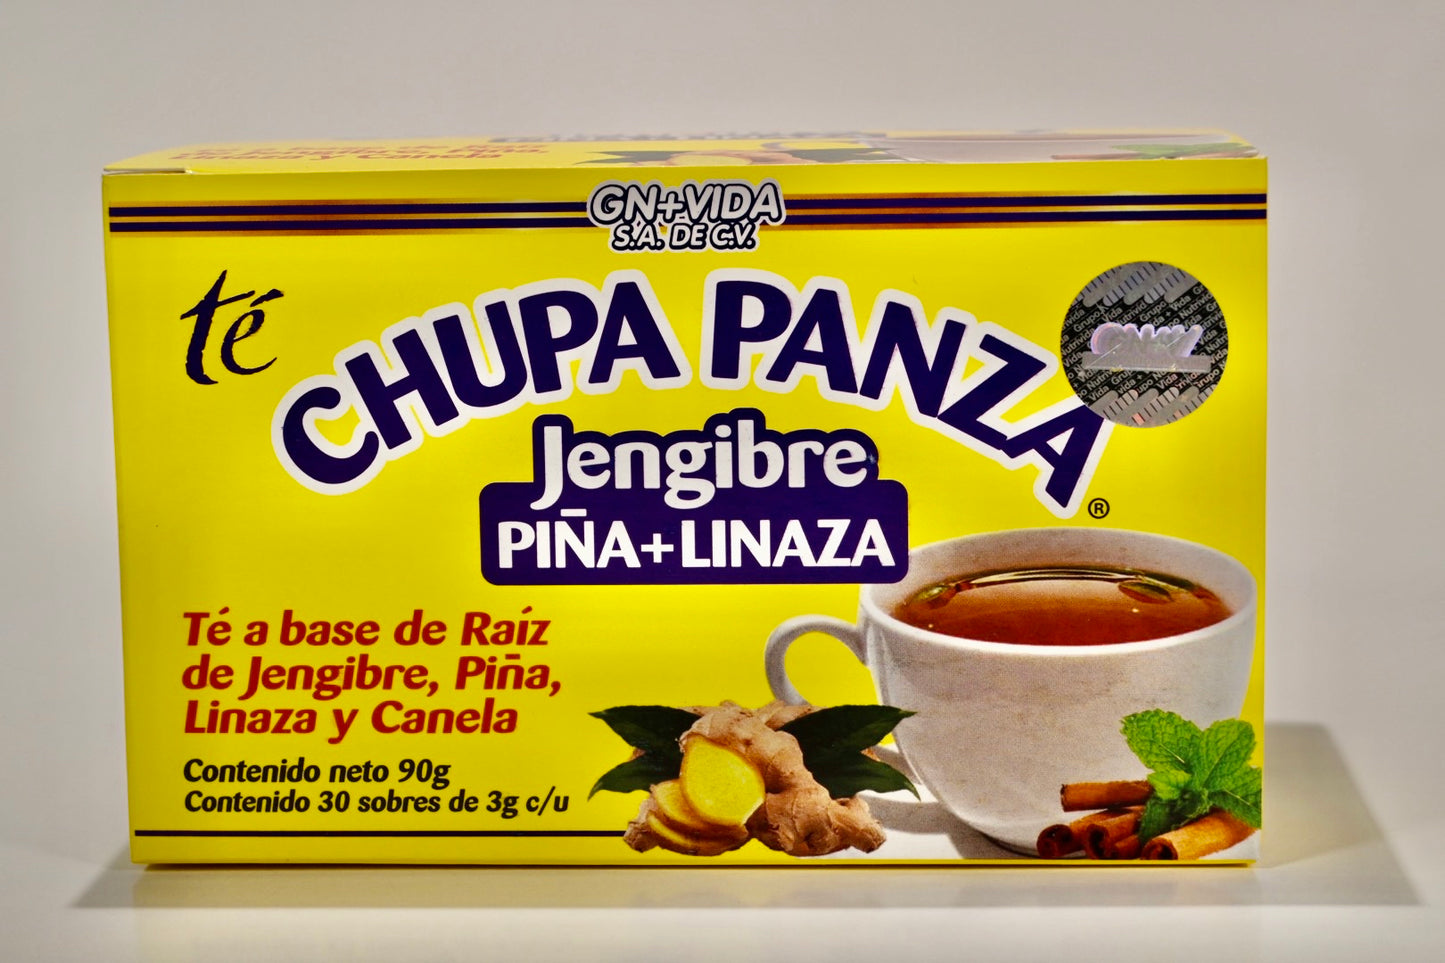 Chupa Panza